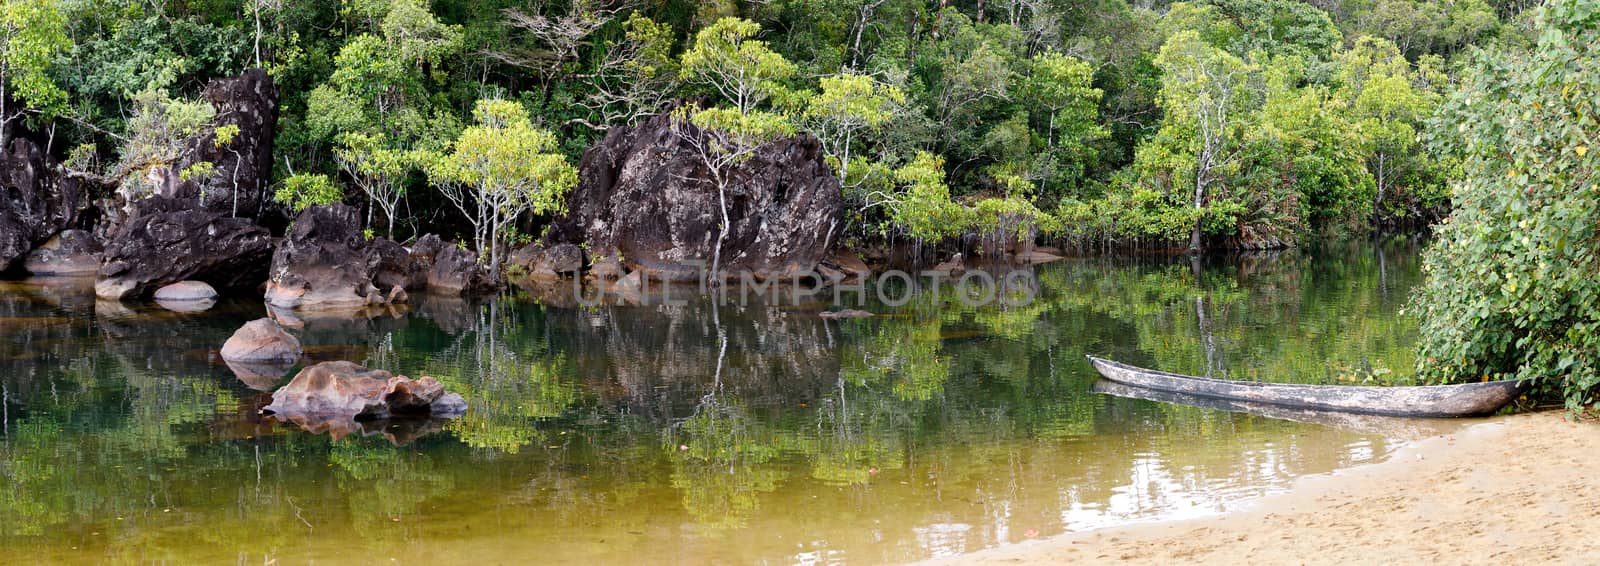 Beautiful pure nature river landscape, Masoala National Park, Madagascar picturesque wilderness nature scene.